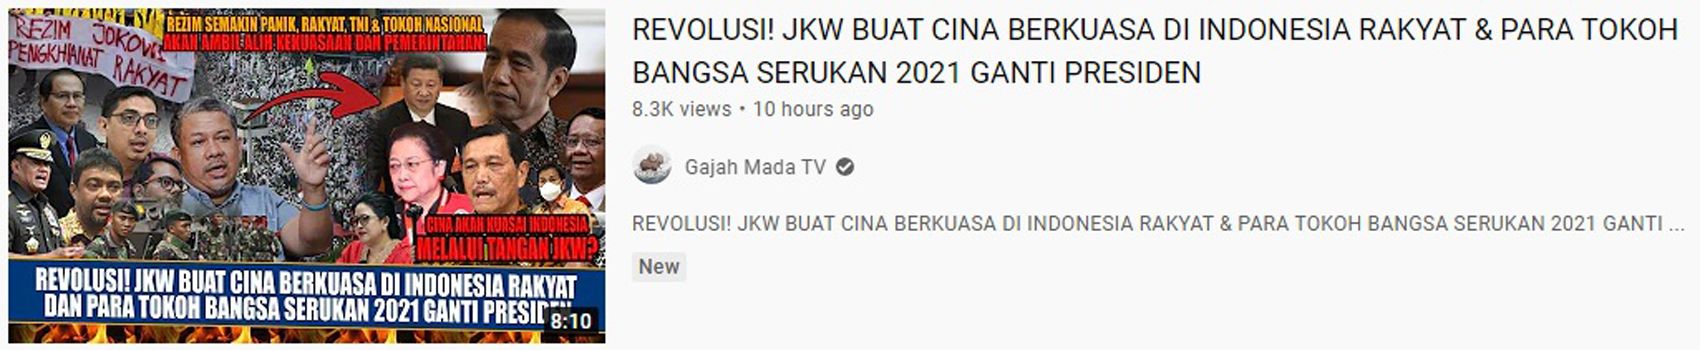 Klaim Hoax Video 'REVOLUSI! JKW BUAT CINA BERKUASA DI INDONESIA RAKYAT & PARA TOKOH BANGSA SERUKAN 2021 GANTI PRESIDEN'